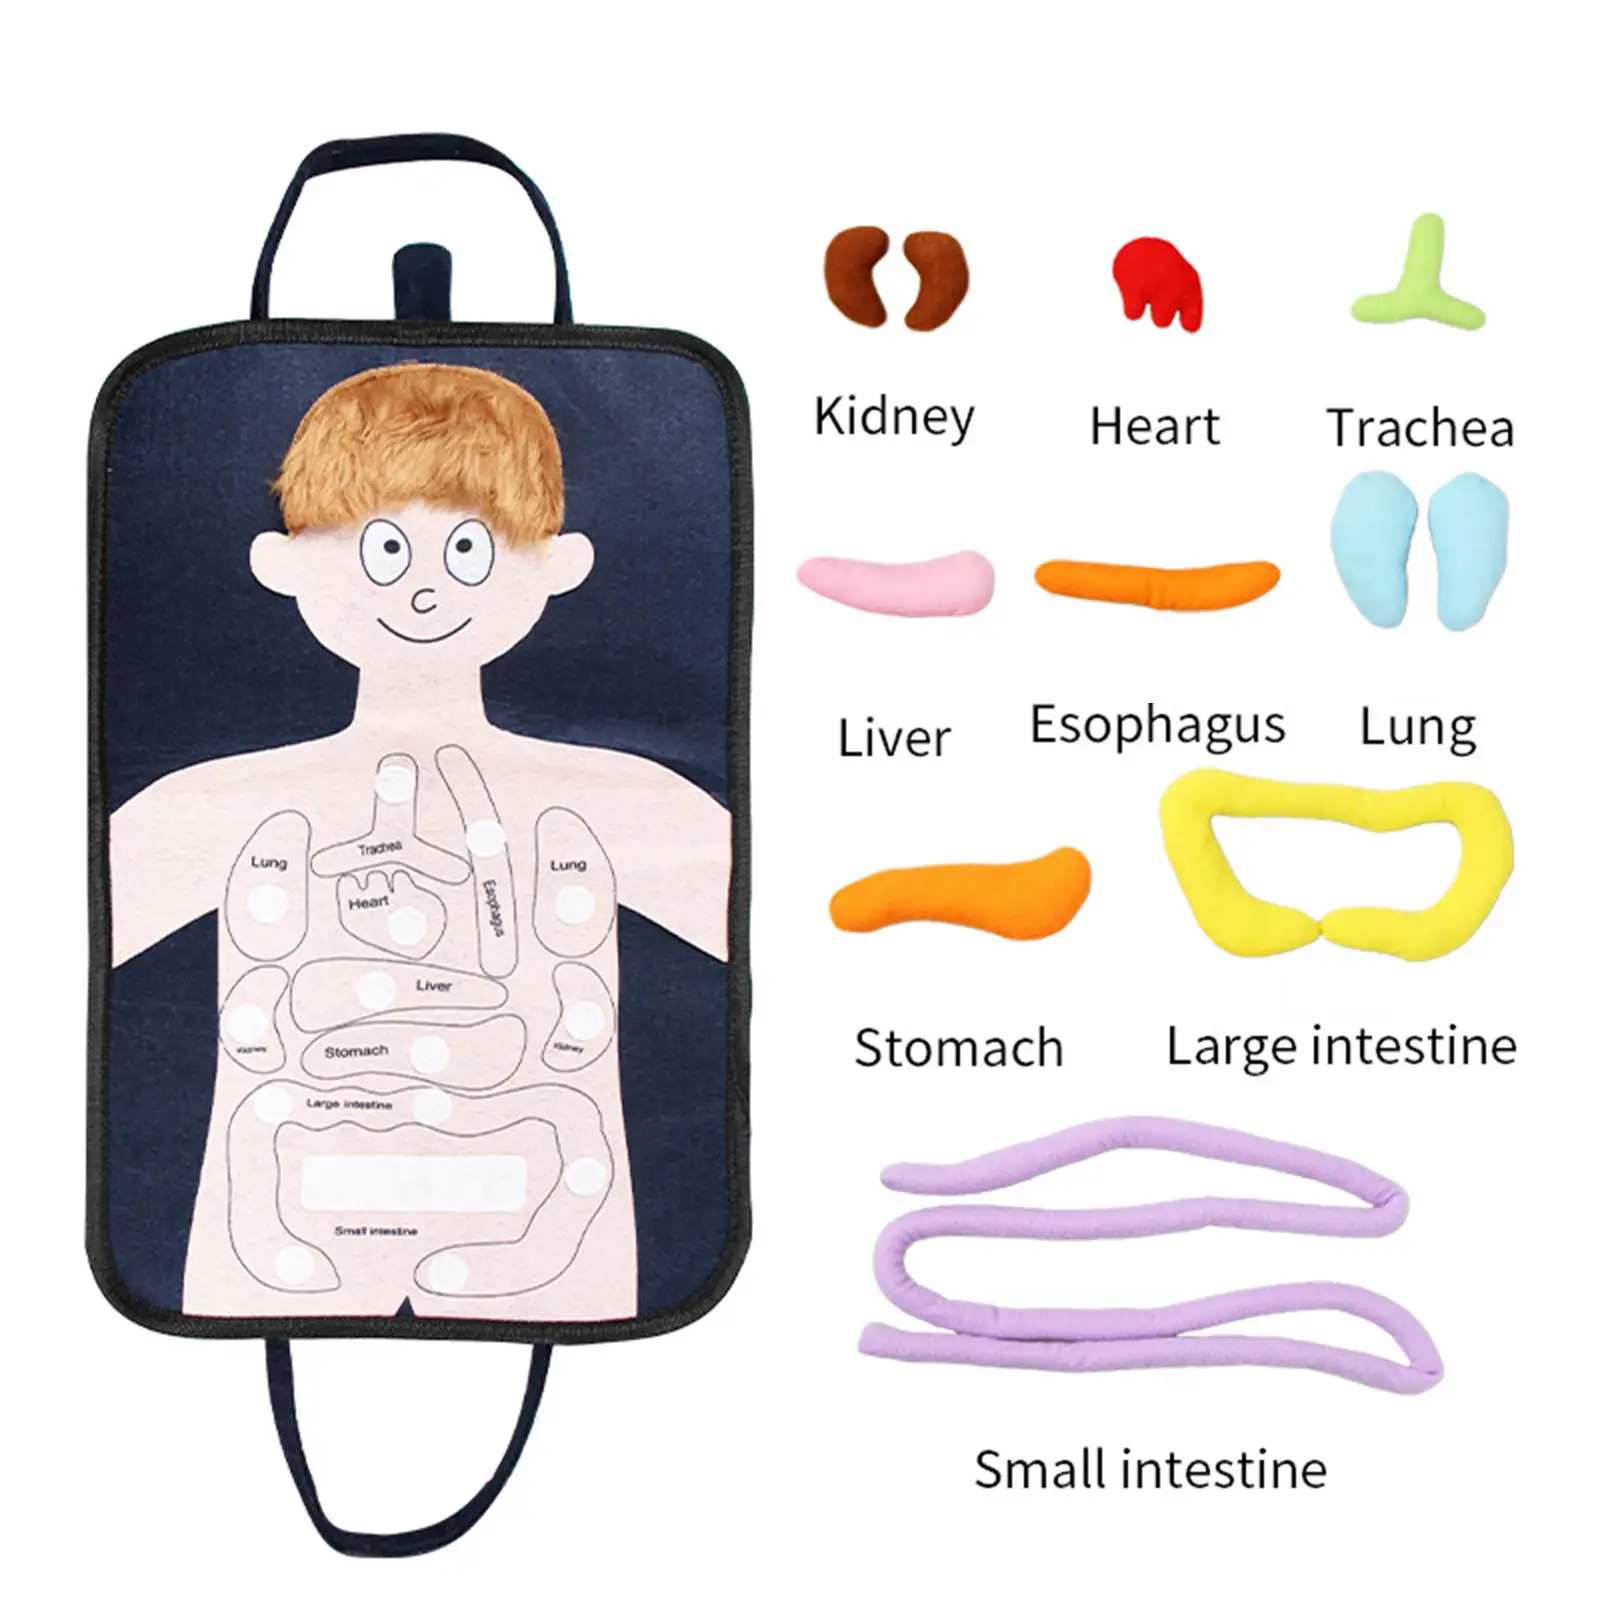 Human Body Anatomy Model Organ Toy Early Education Toys for Children Preschool Student